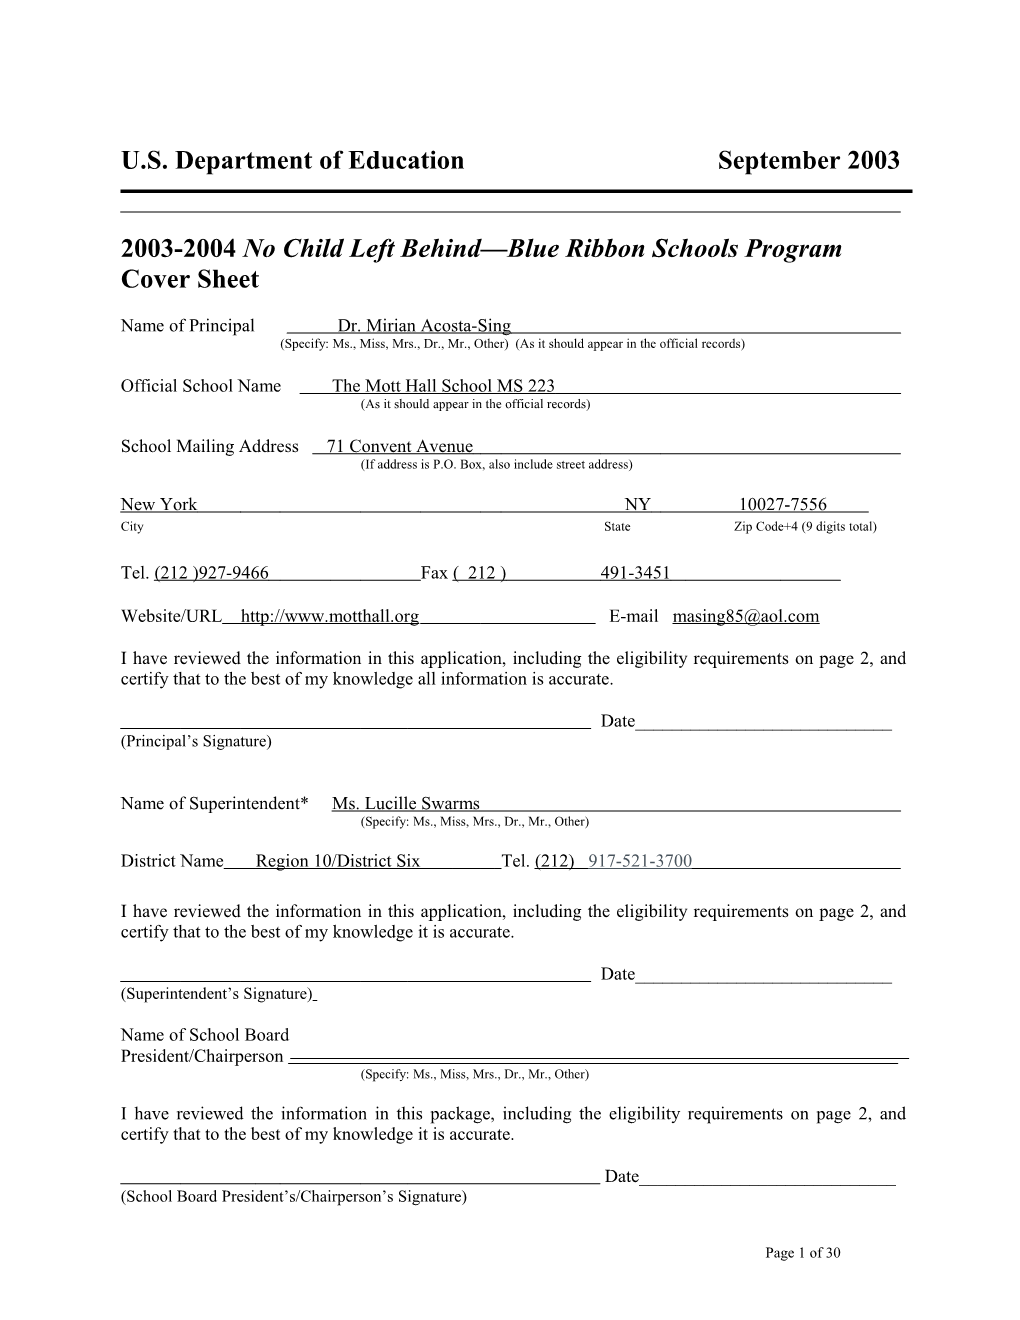 The Mott Hall School MS 223 2004 No Child Left Behind-Blue Ribbon School Application (Msword)